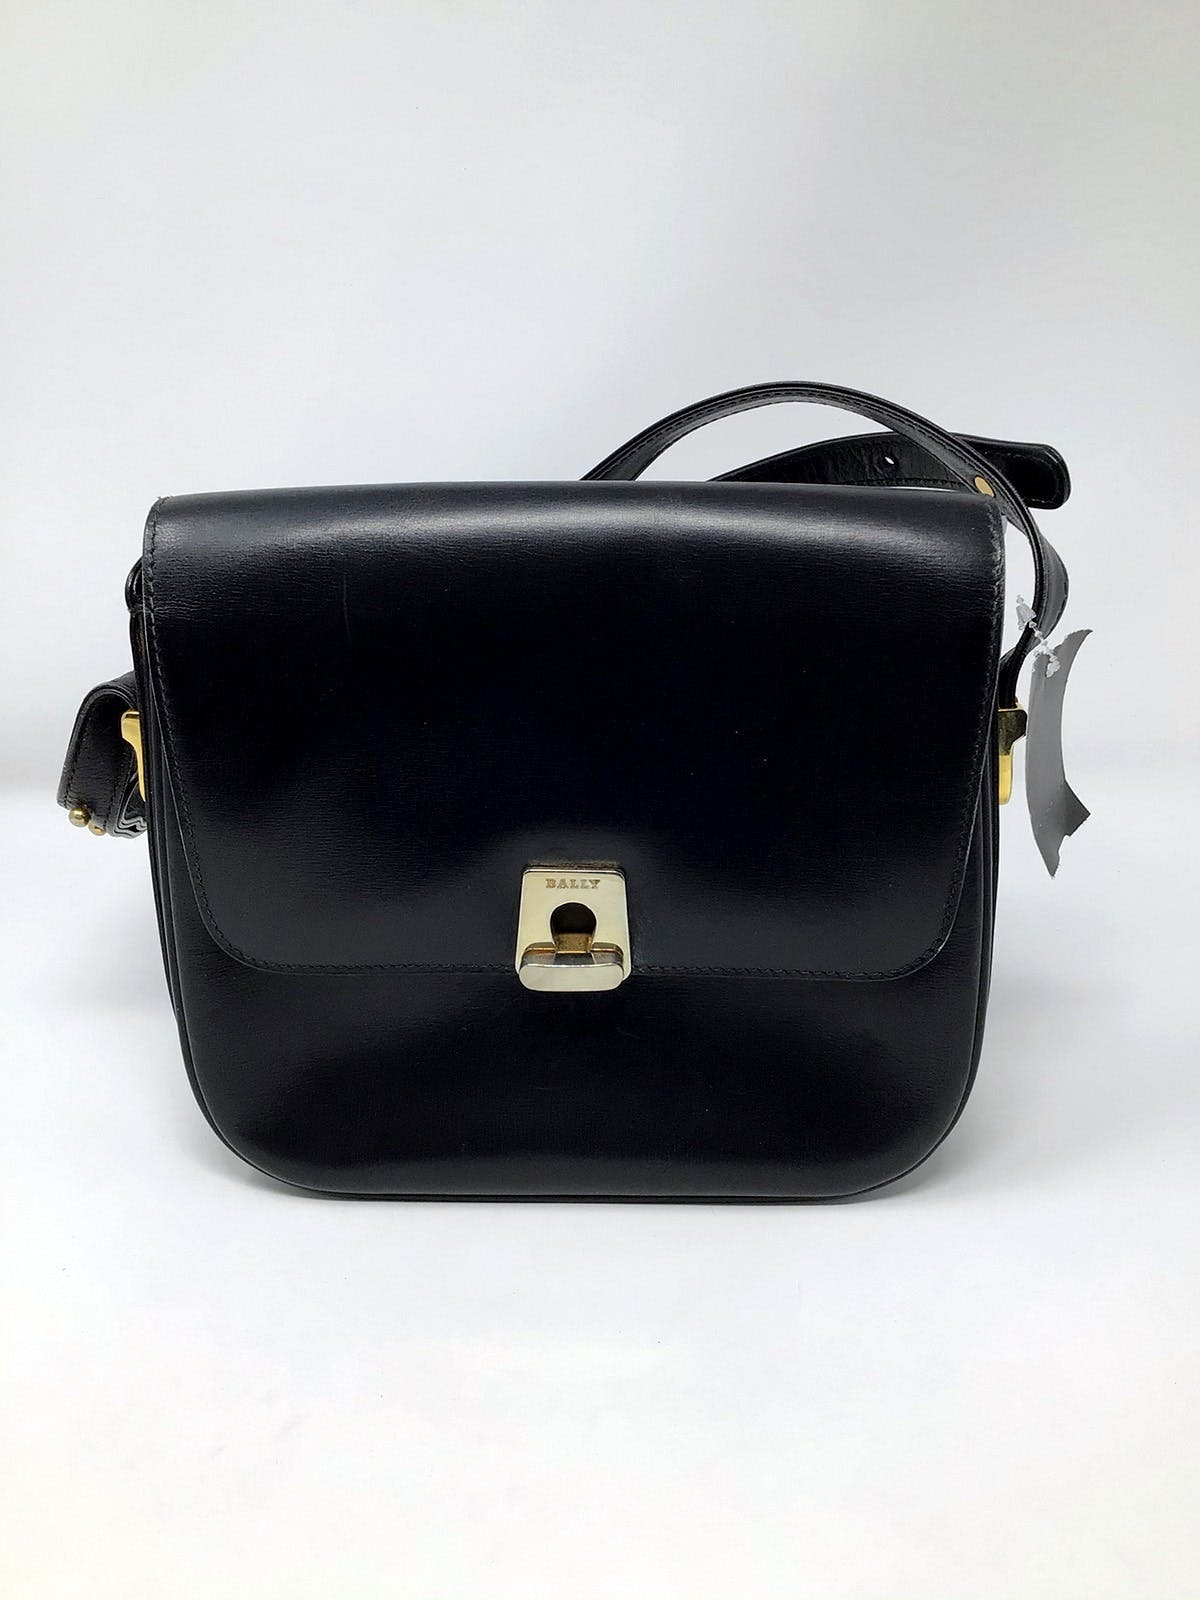 BALLY Black/Dark Brown Pebble Leather Shoulder Bag Purse* - beyond